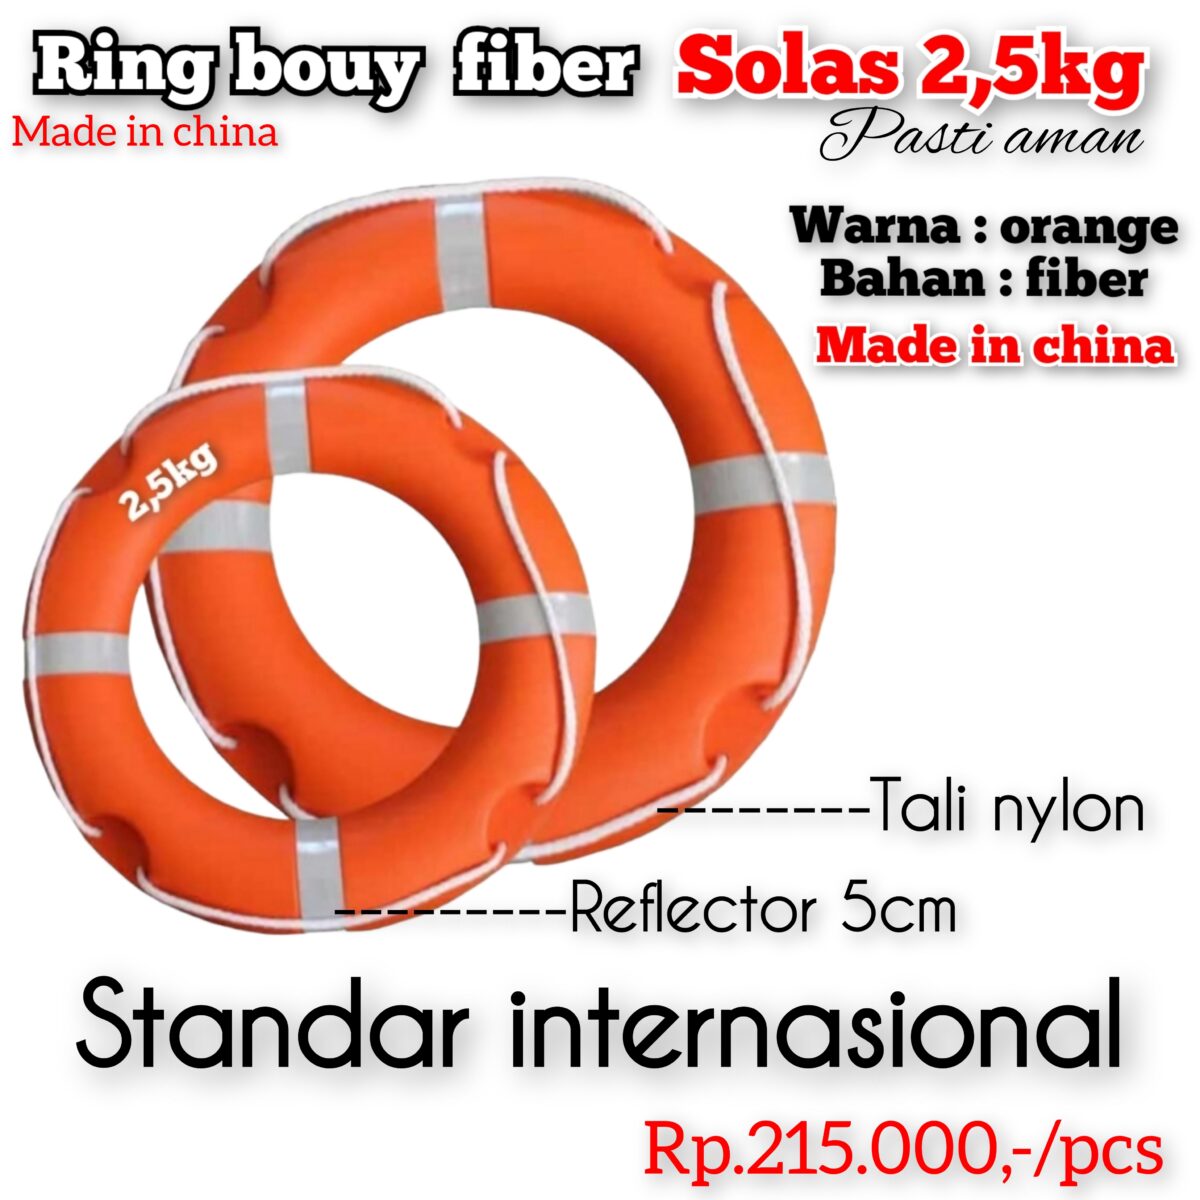 Life bouy / Ring bouy solas 2,5kg